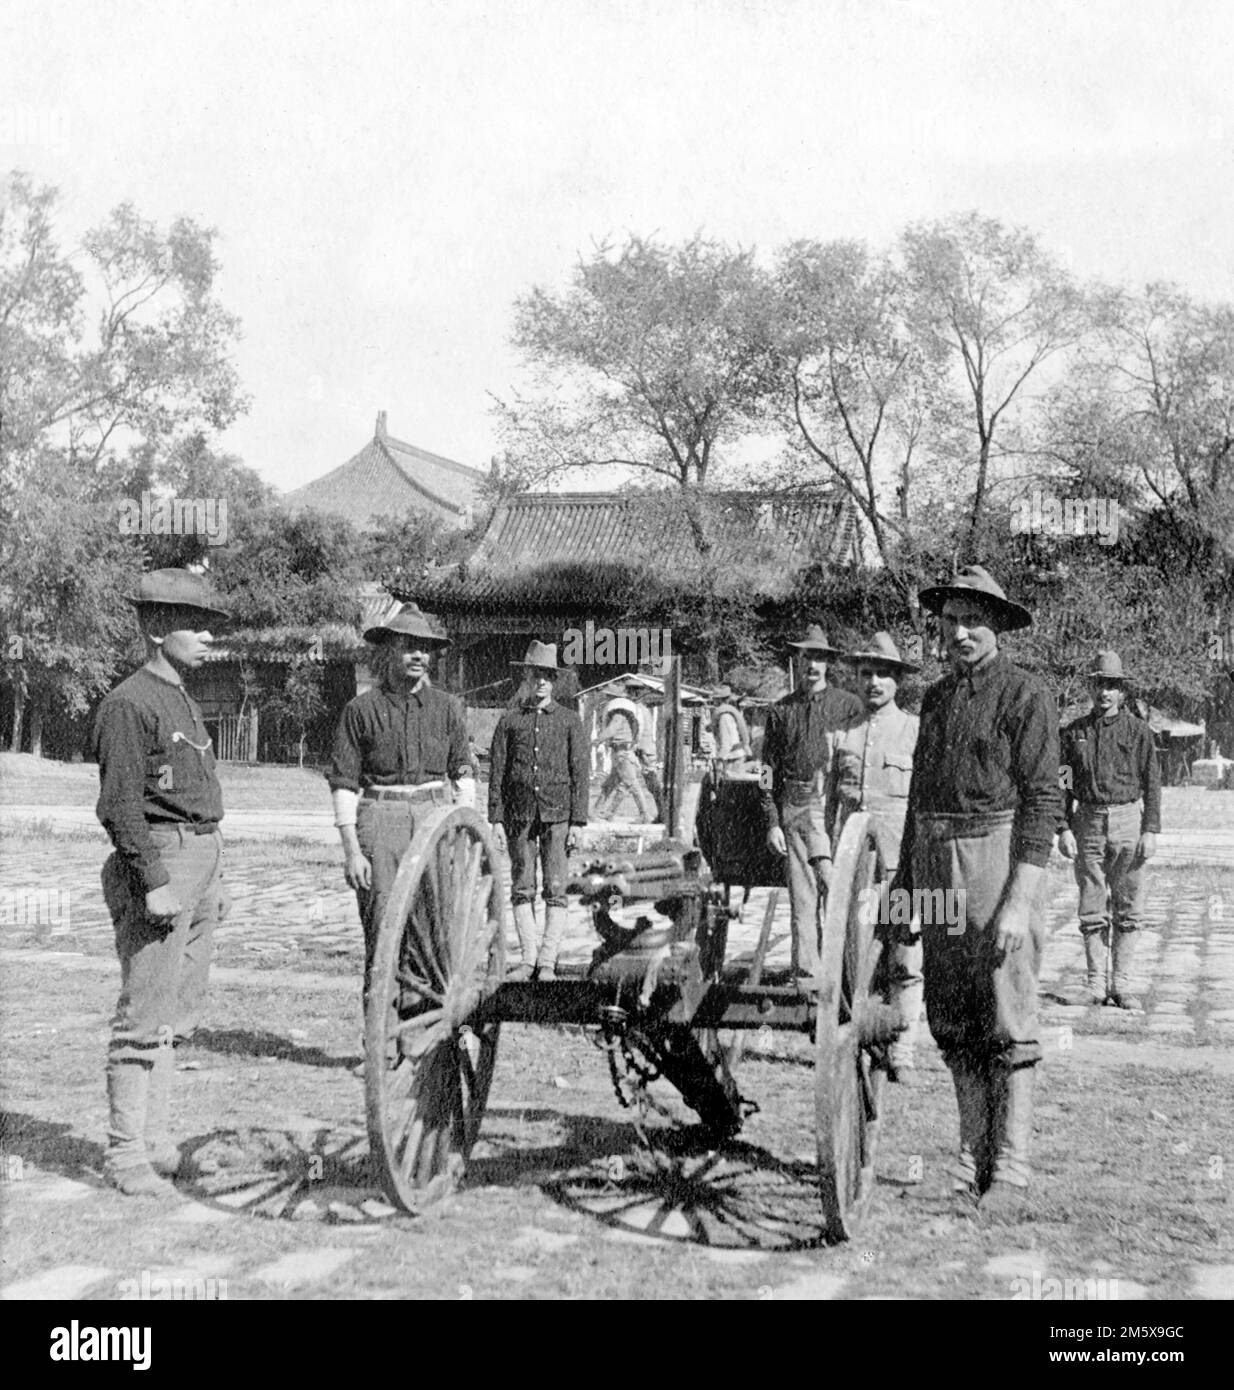 Boxer-Rebellion. 9. US-Dollar Infanterie-Kampfgewehreinheit am Hof der Verbotenen Stadt, Peking, China. Foto: Keystone View Company, 1900 Stockfoto